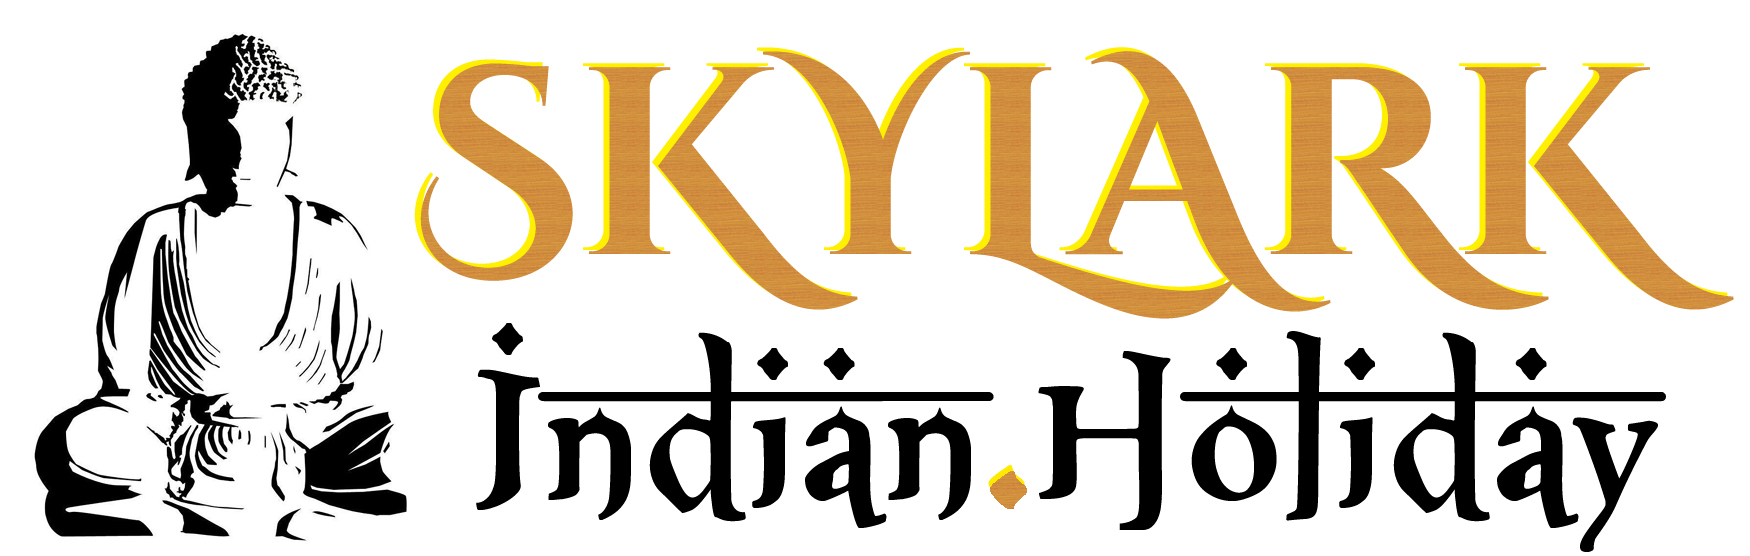 Skylark Indian Holiday